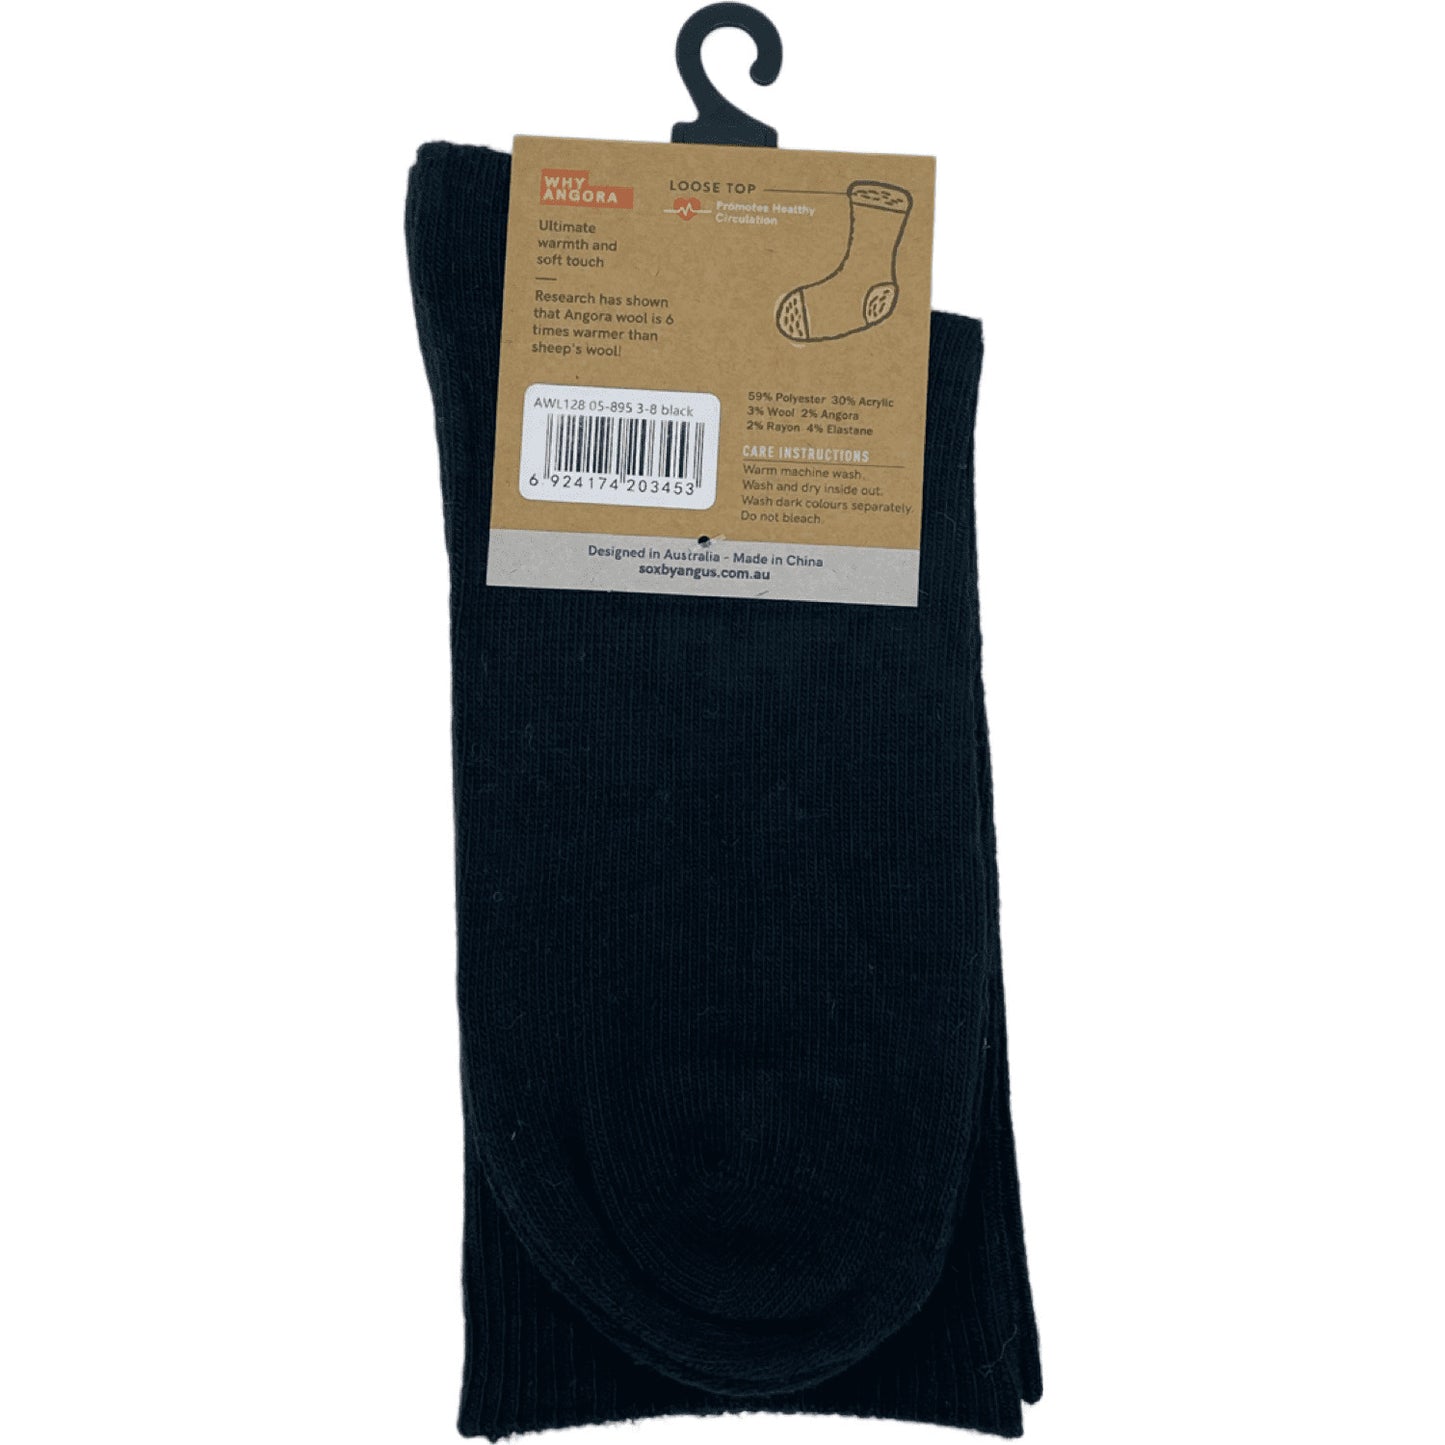 Angora Wool Blend Loose Top Socks - NO SEAM - Black